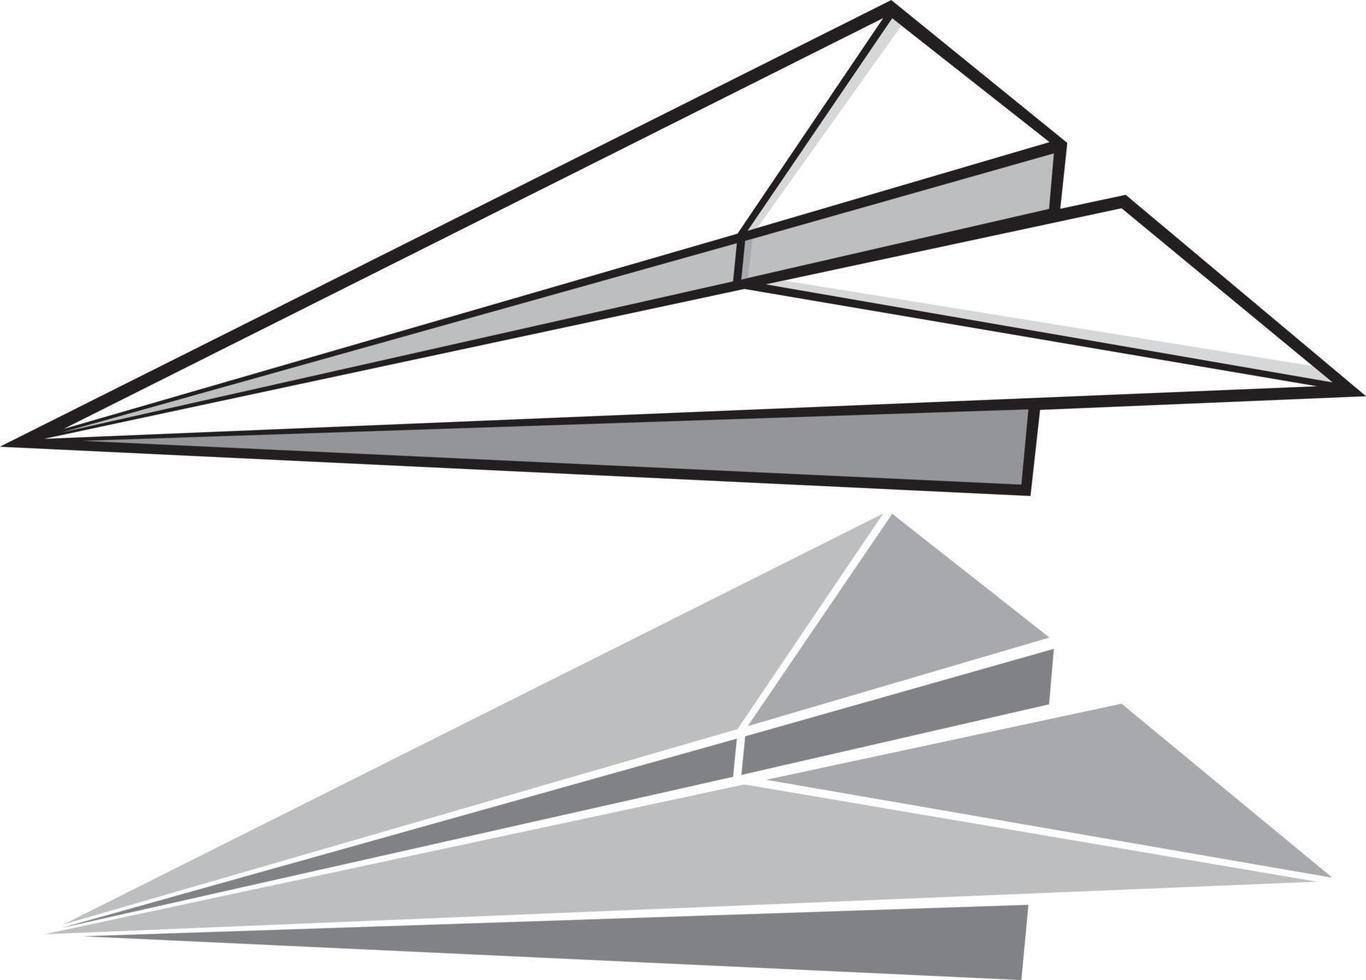 Paper Plane Design vector